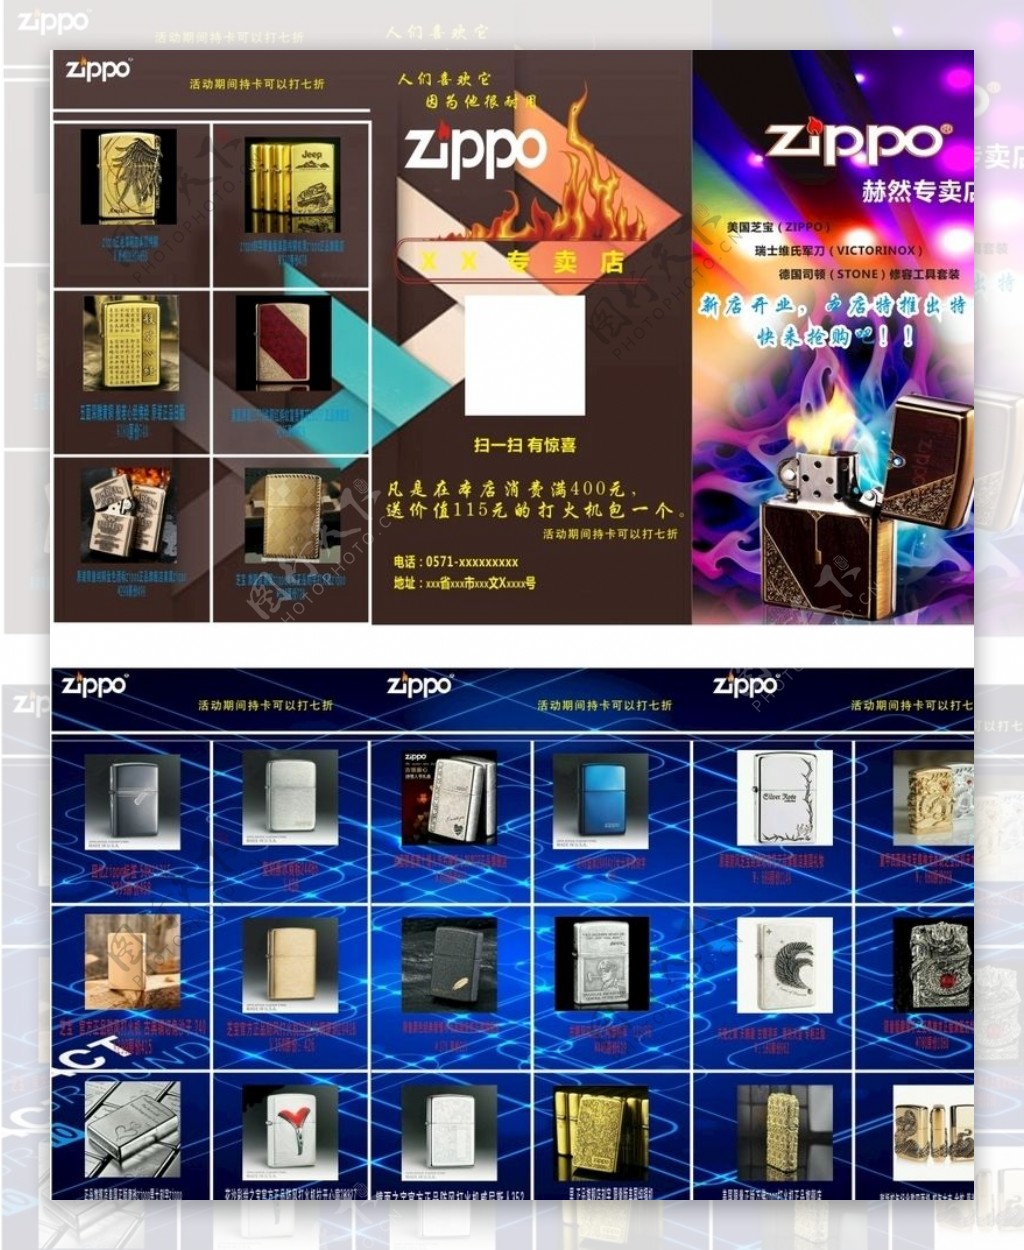 Zippo打火机产品宣传册